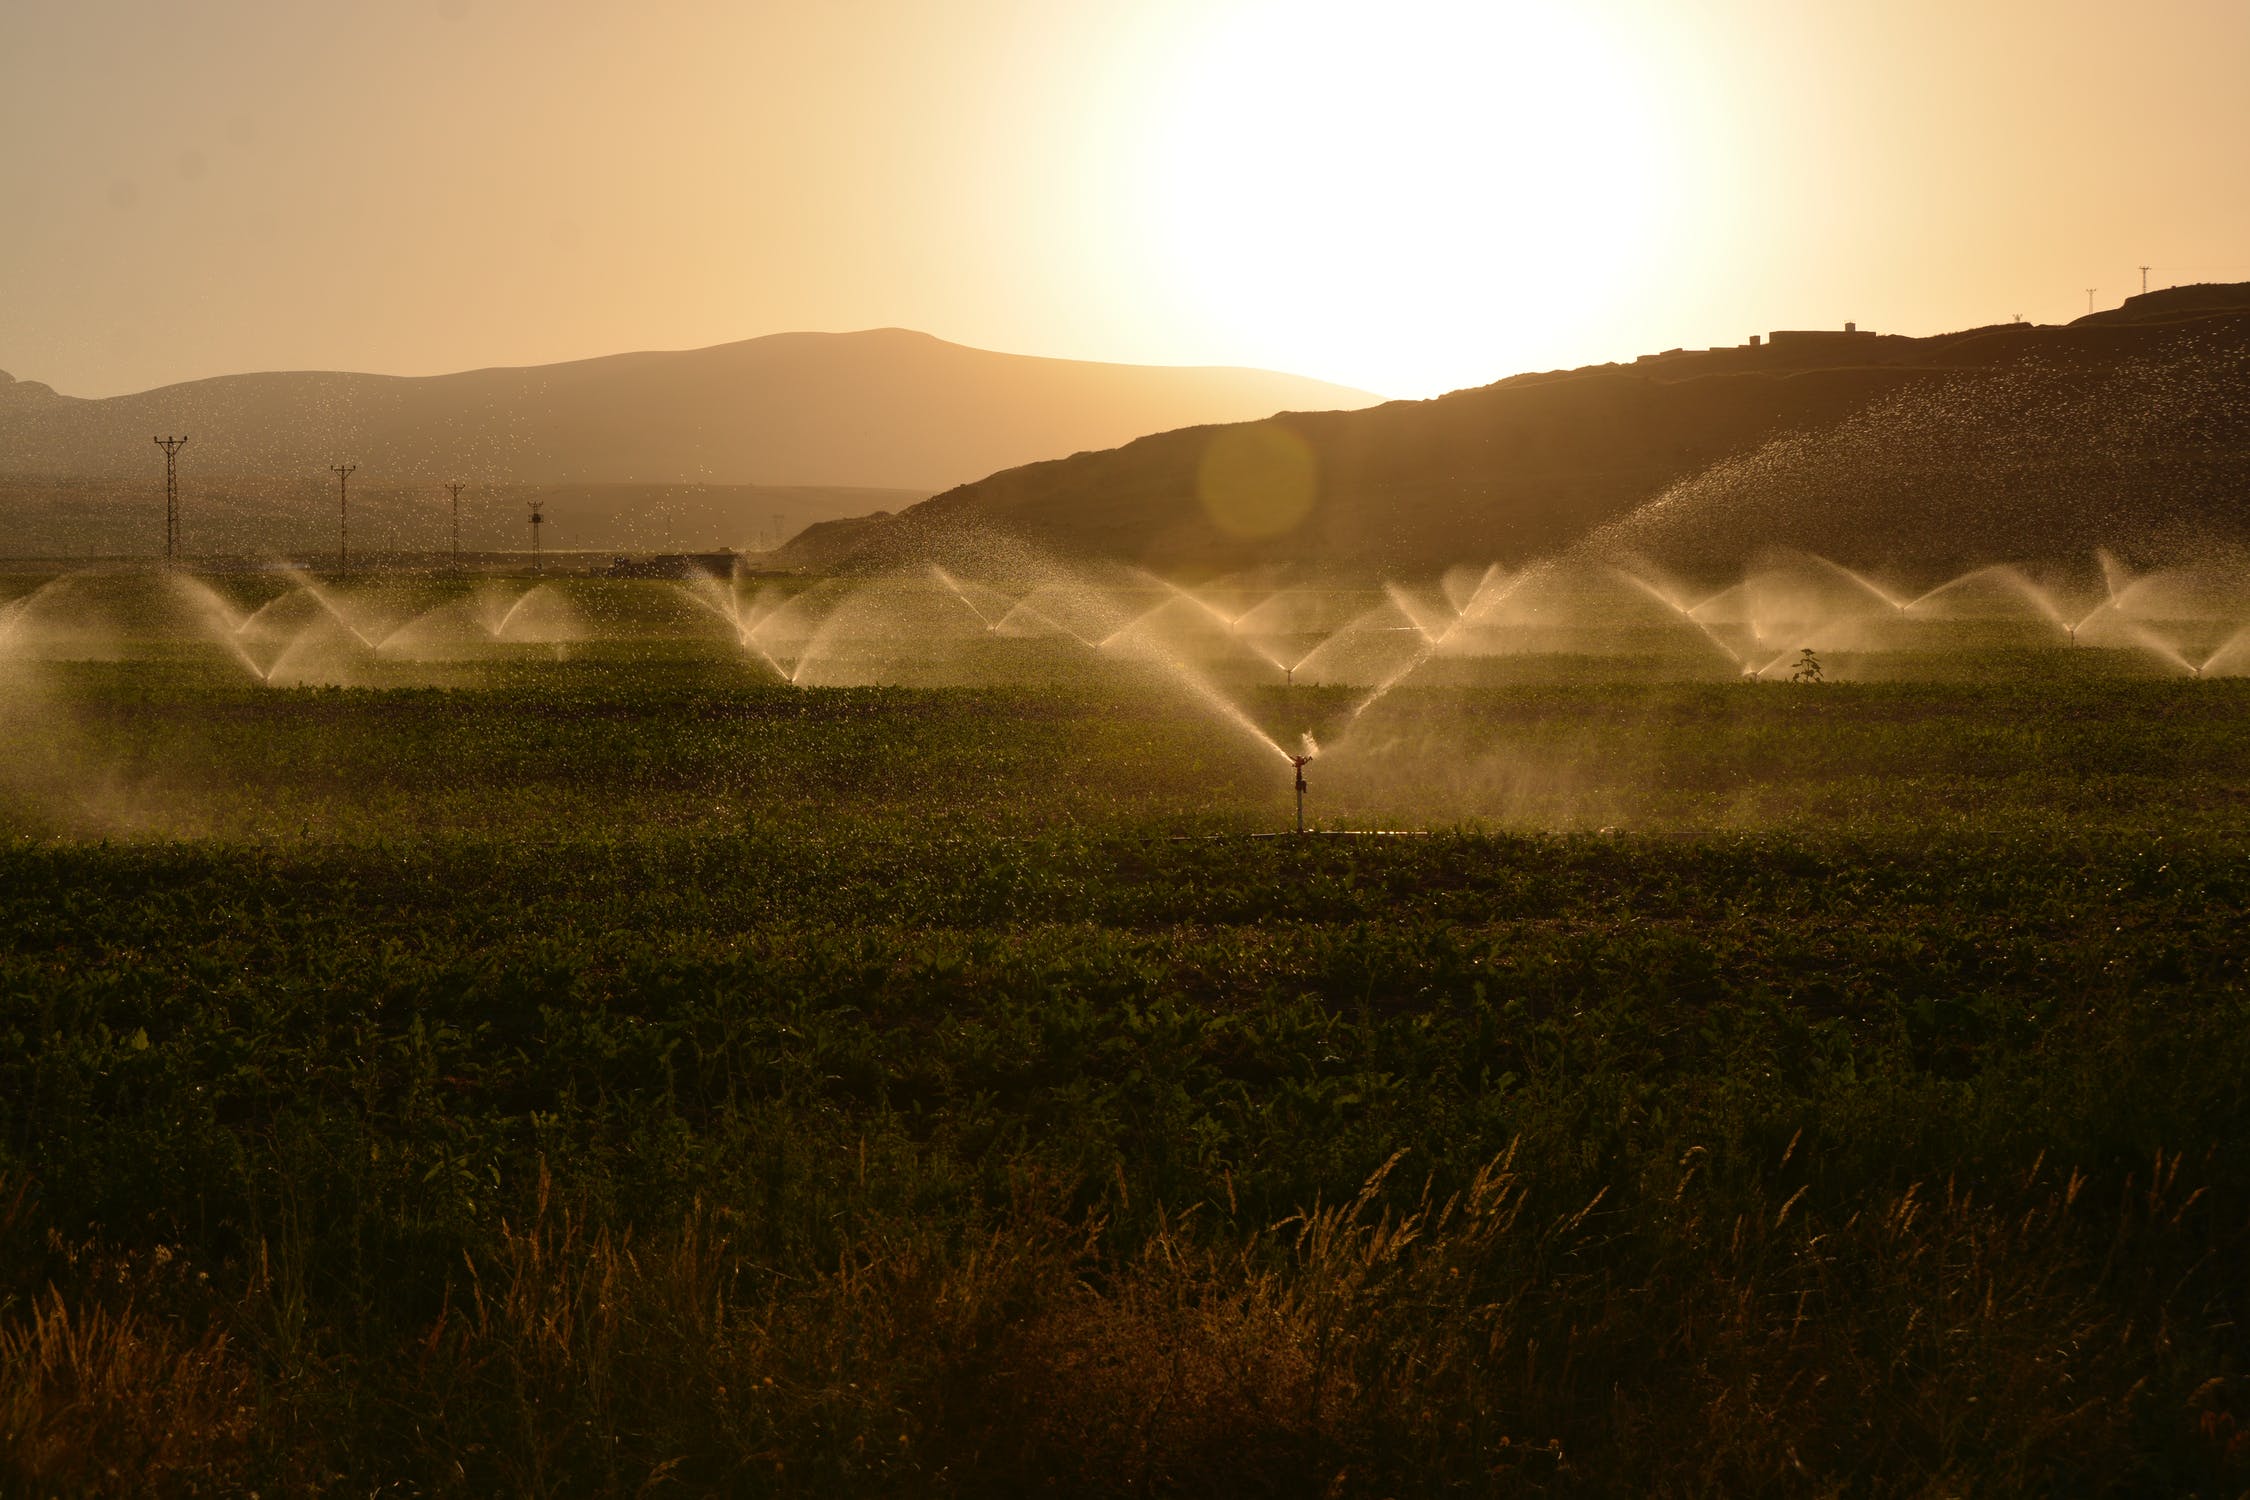 Field Irrigation